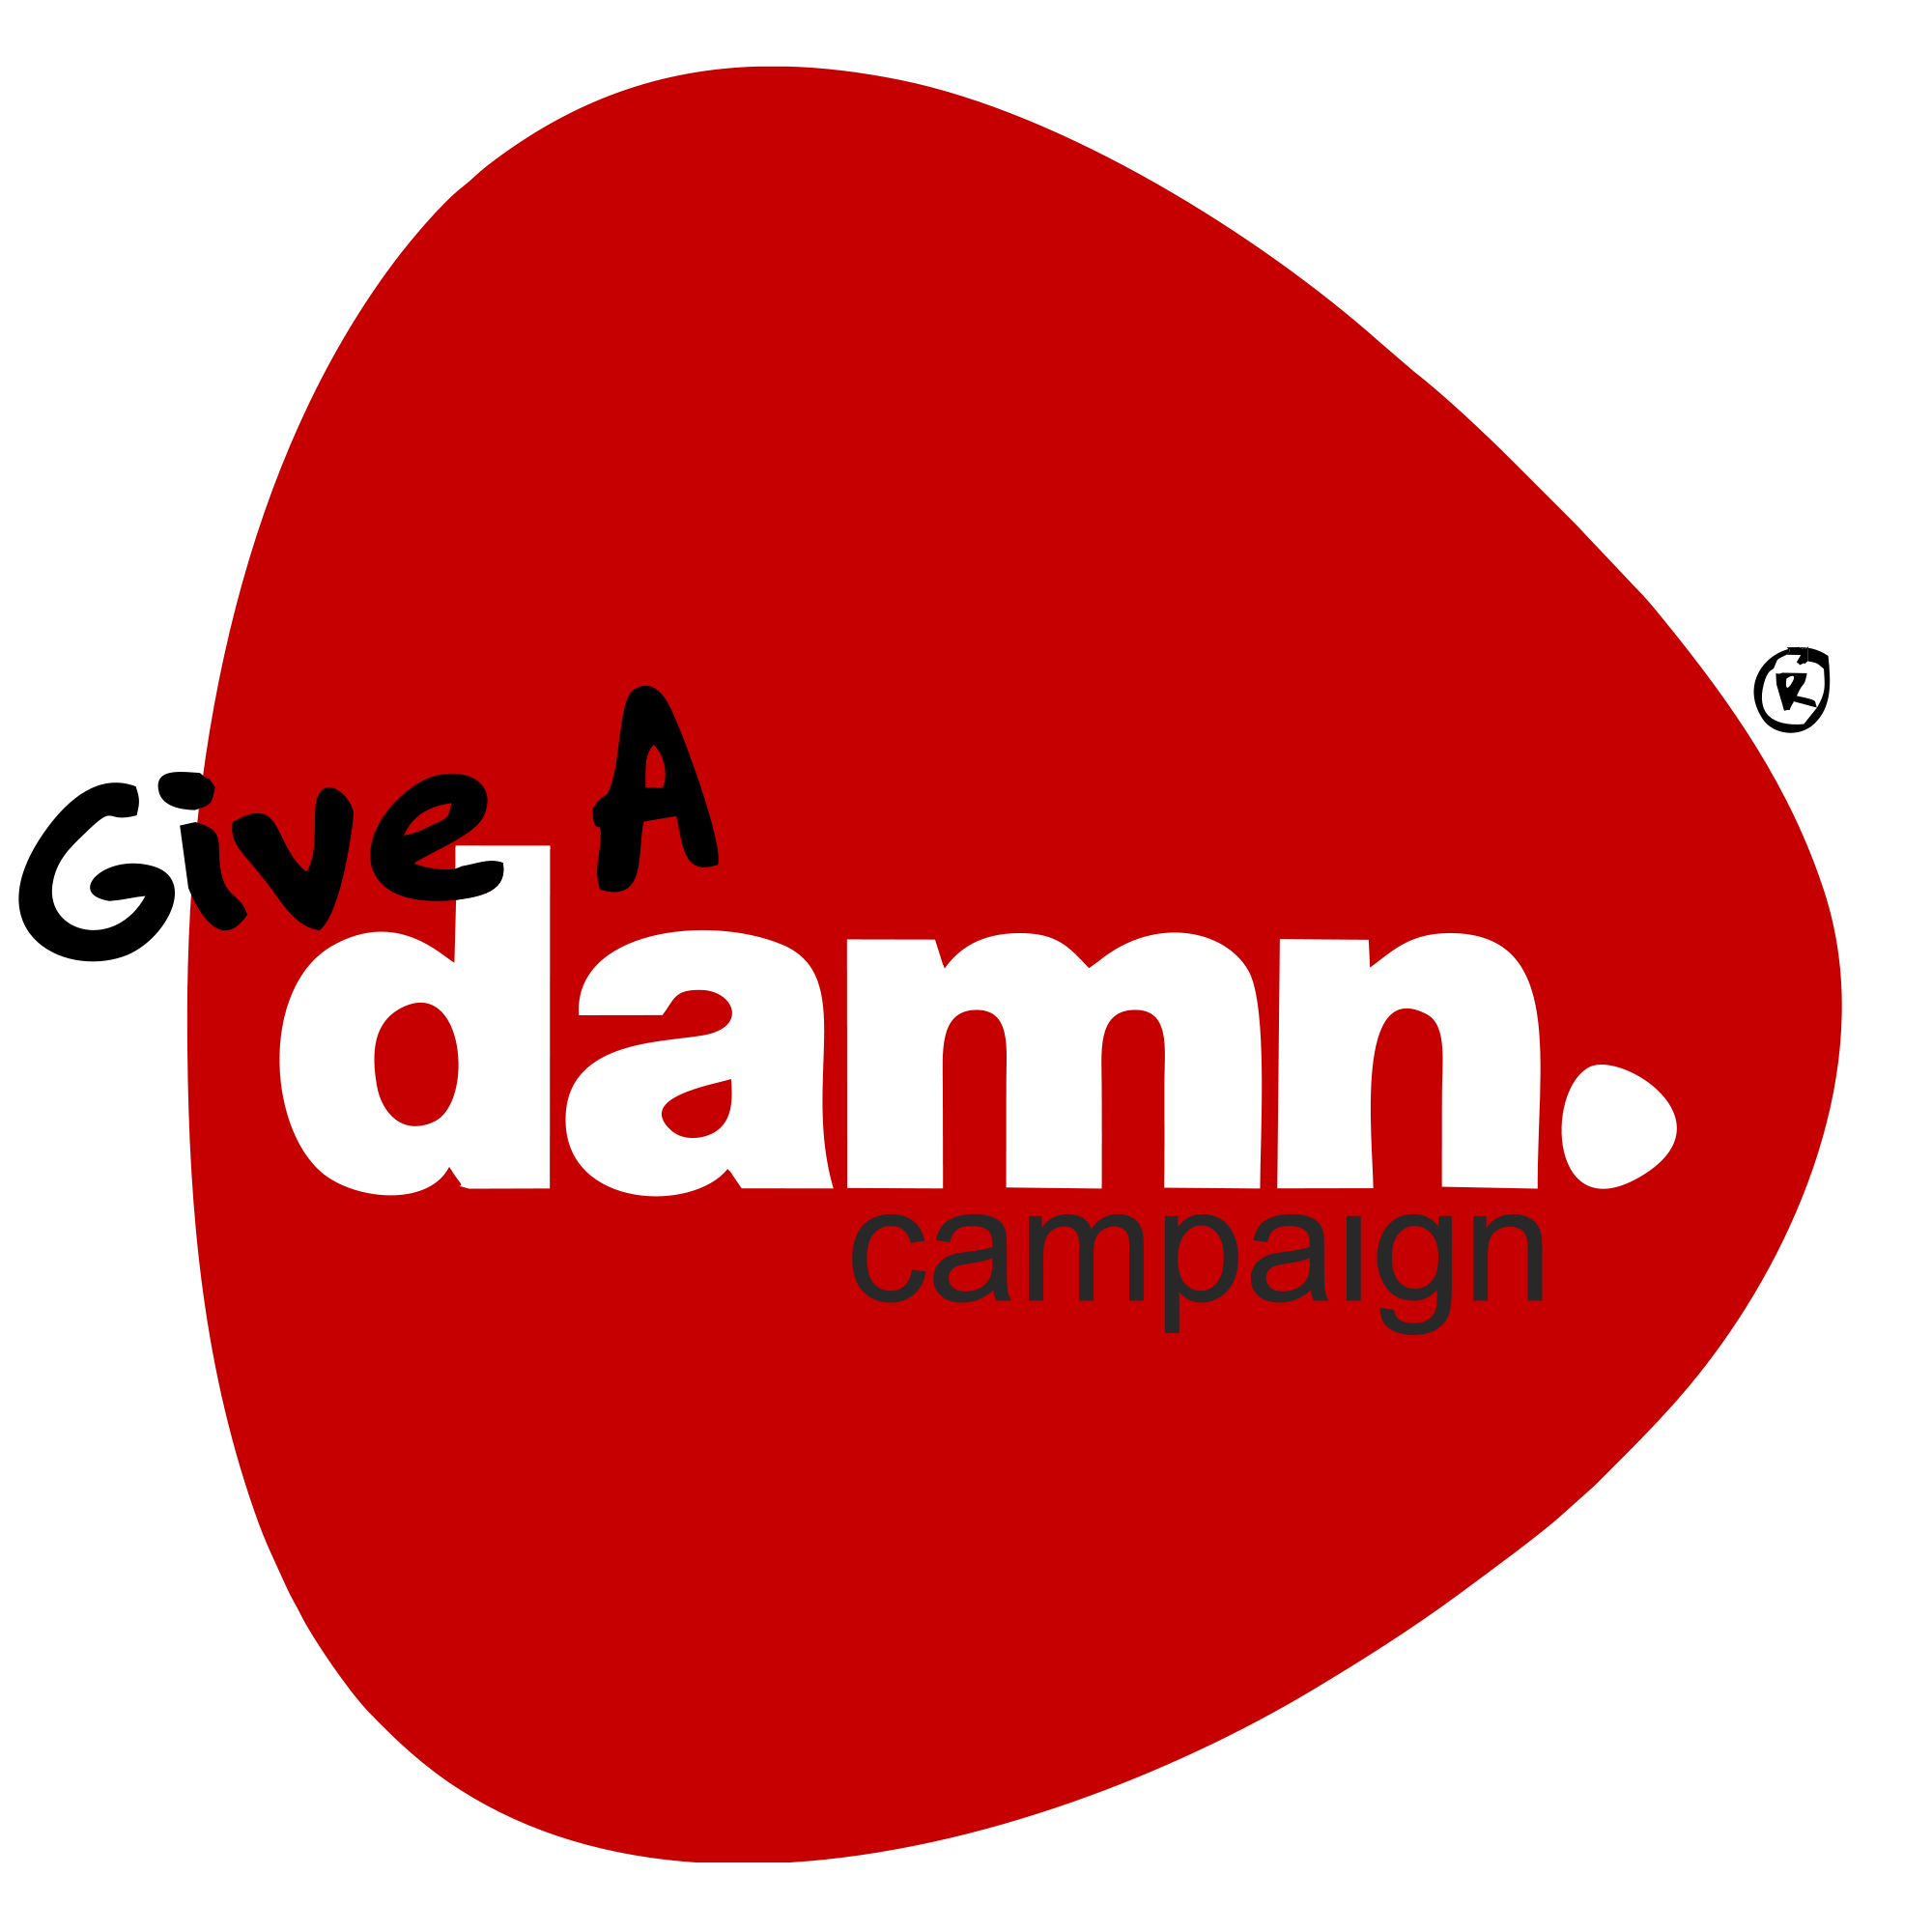 Damn Logo - Give a damn campaign logo.svg